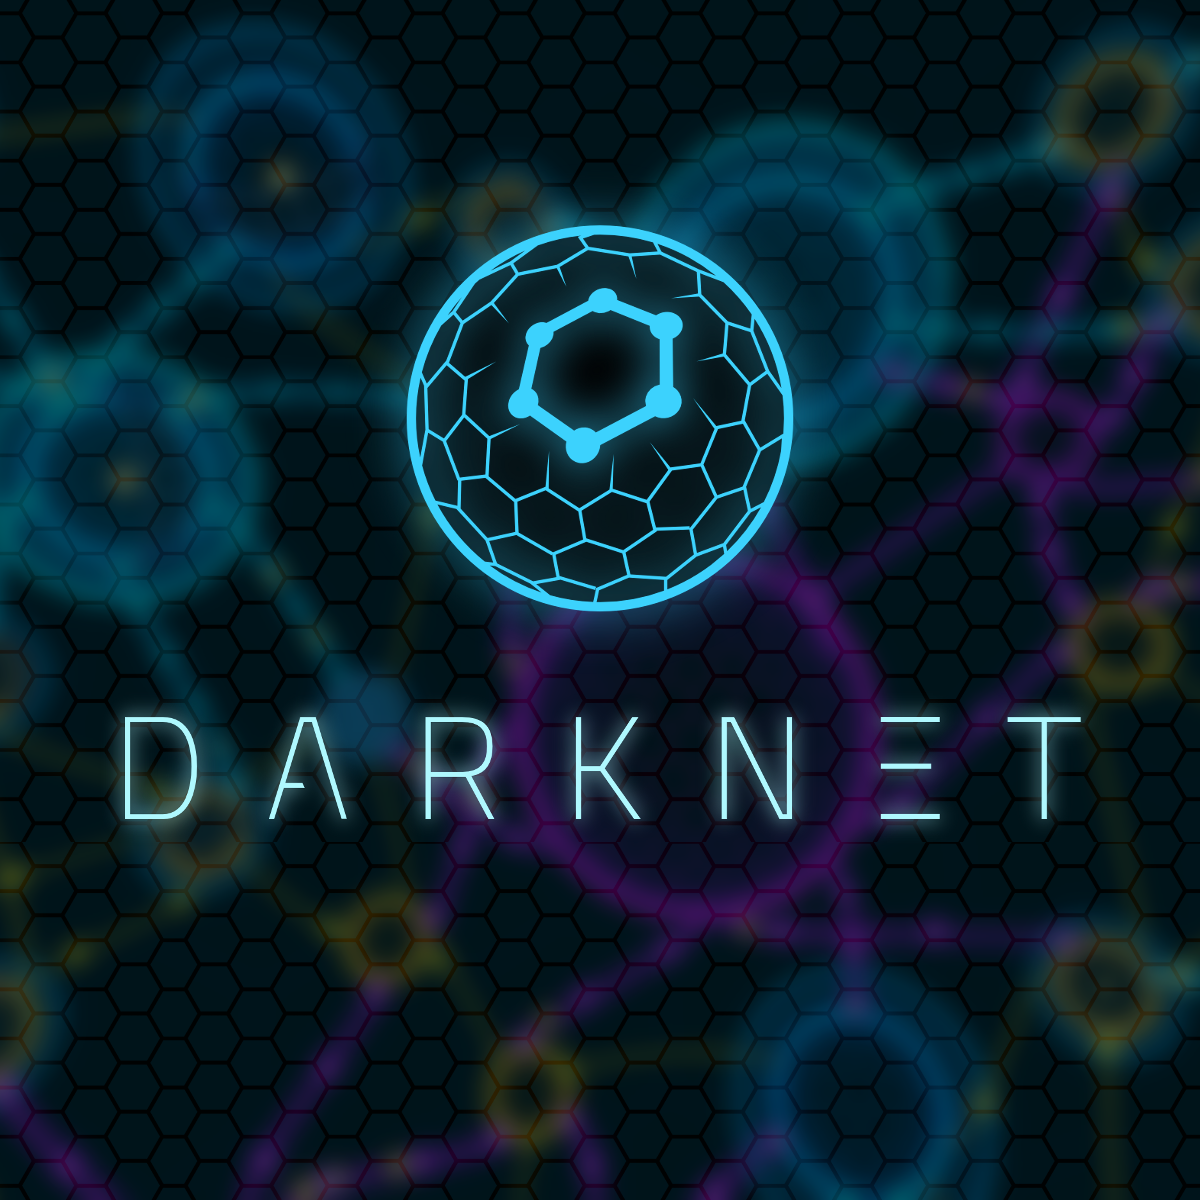 Darknet Market Controlled Delivery